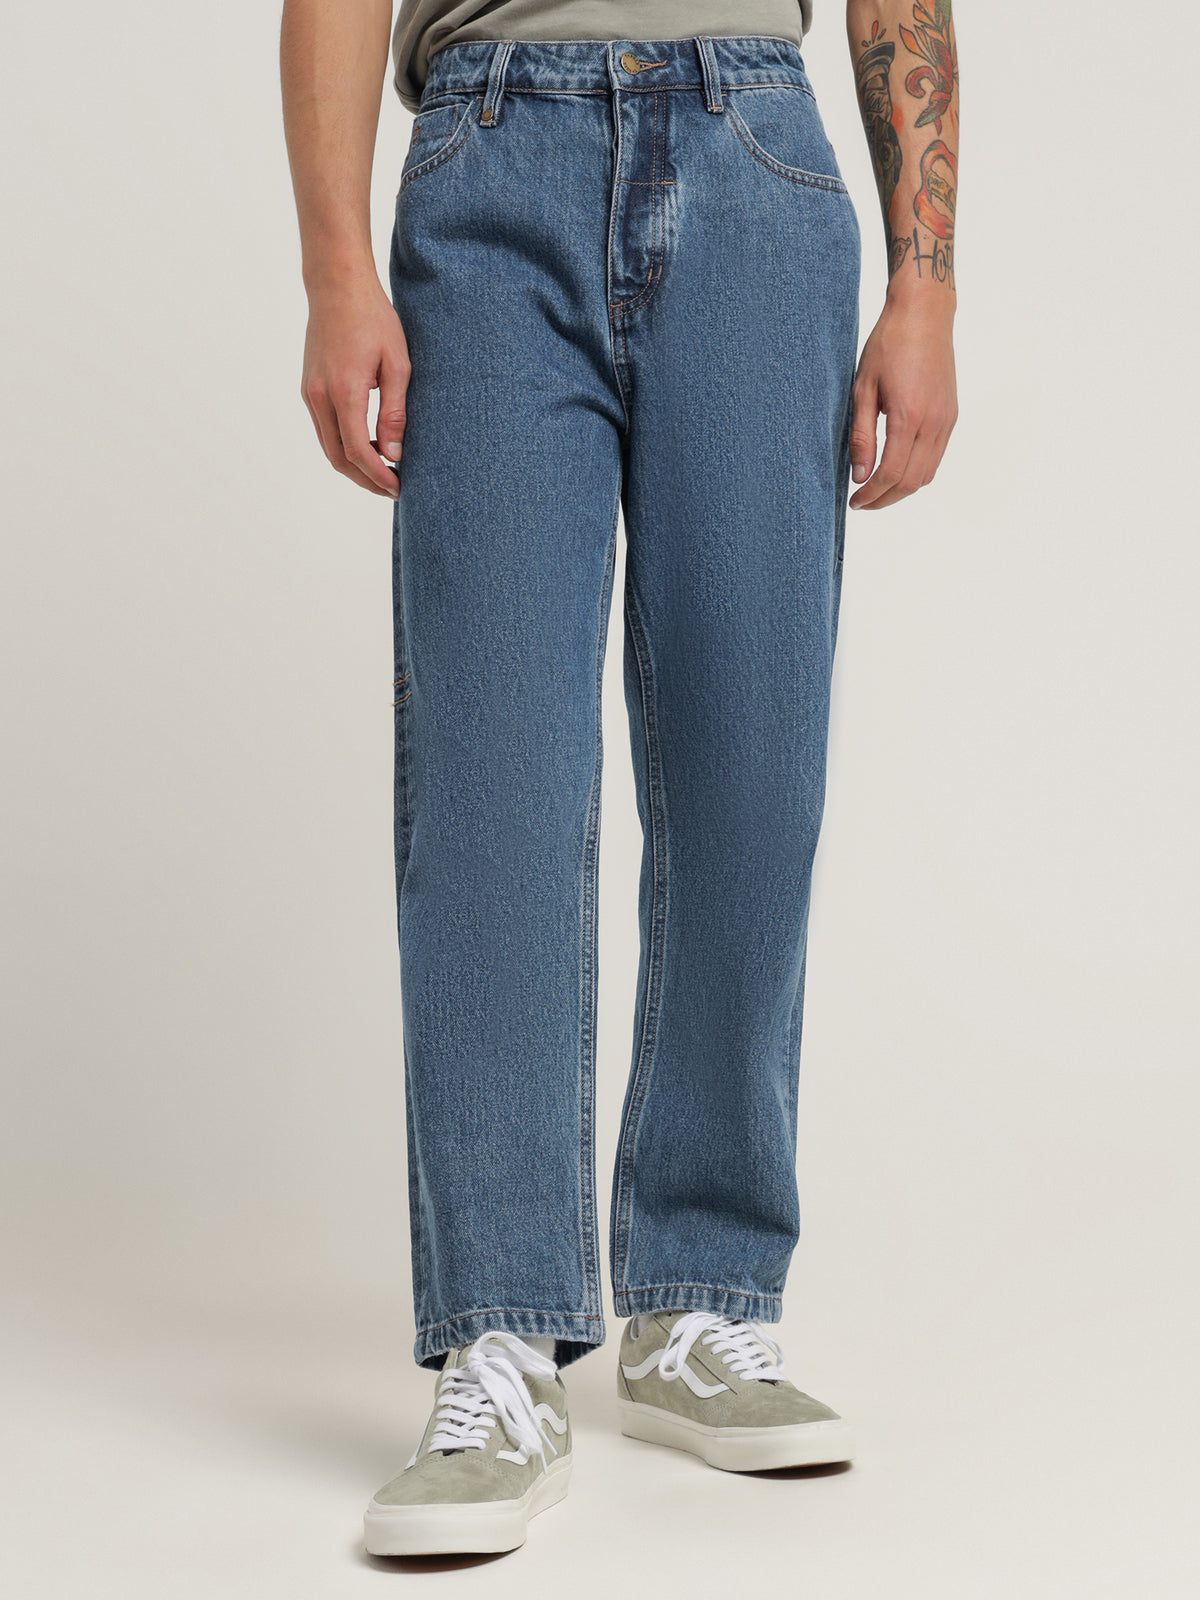 Slacker Denim Jeans in Highway Blue